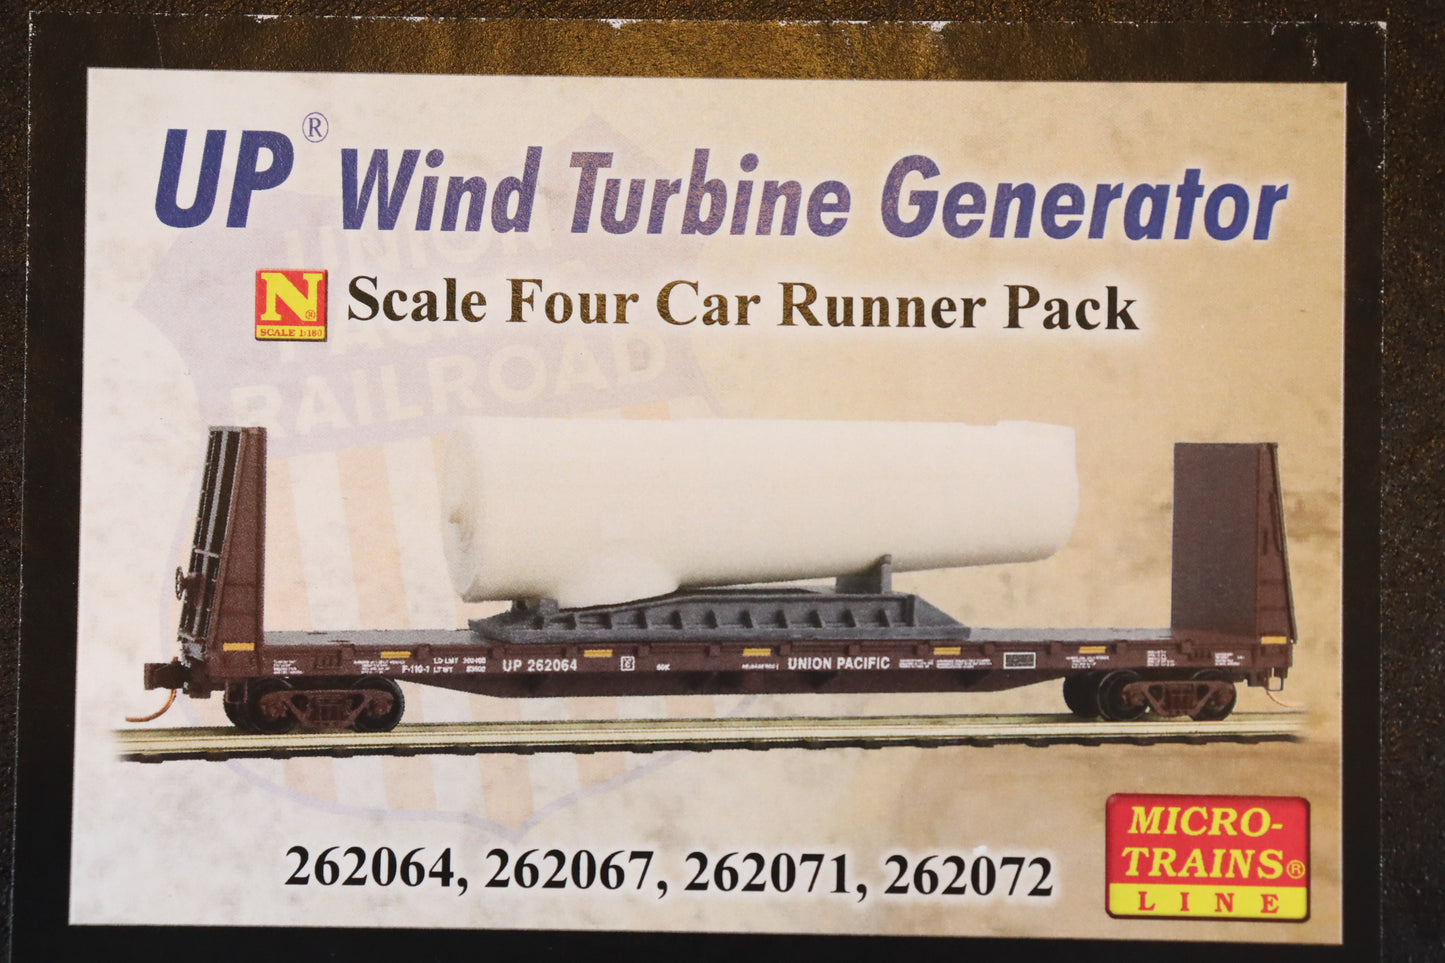 MTL-993 01 700 - 61' Bulkhead Flat Car - 4 Car Runner Pack - UP Wind Turbine Generator